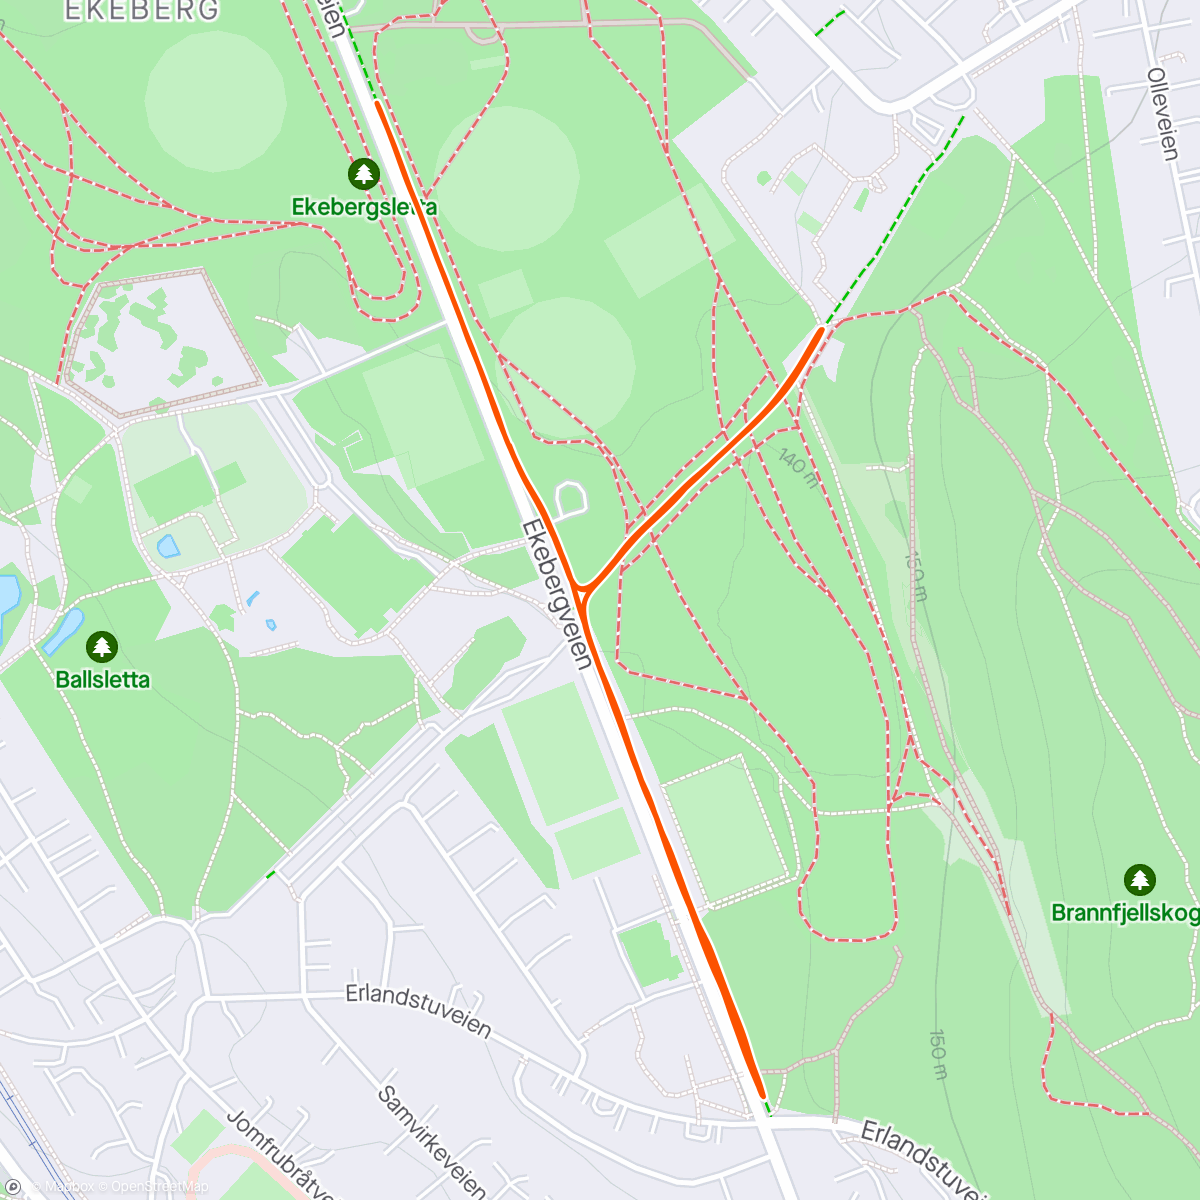 「Ekebergsletta park run」活動的地圖